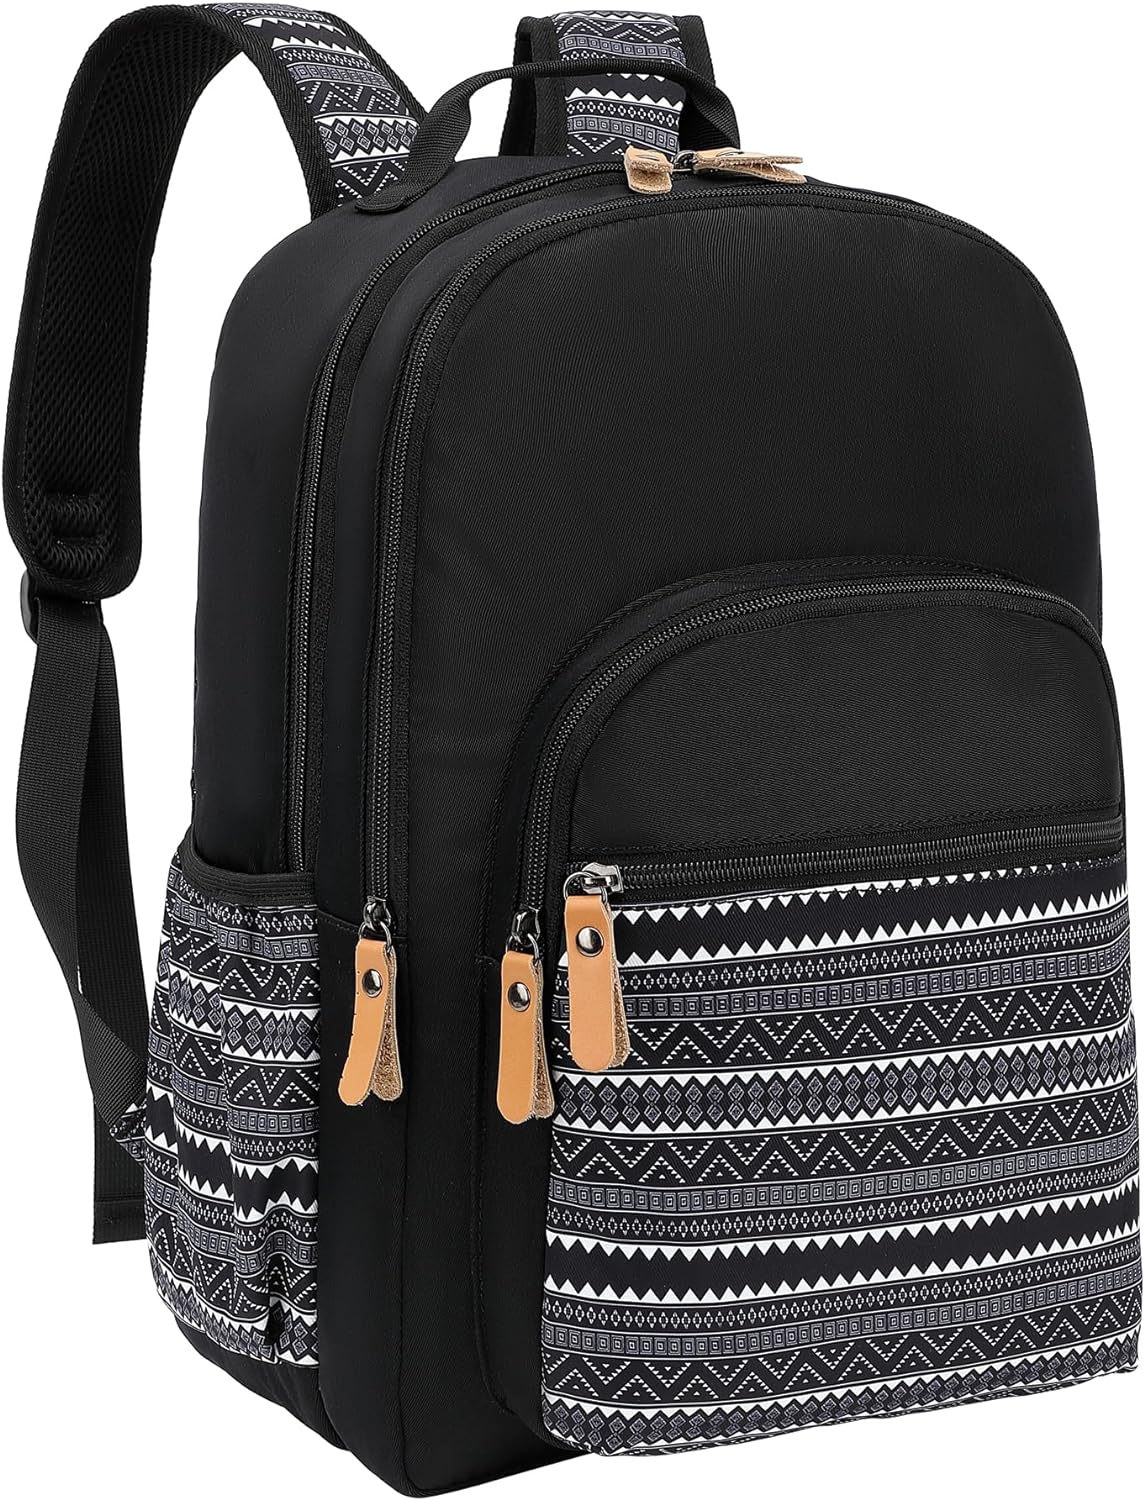 Leaper Water-resistant Floral Backpack Travel Bag bags Satchel